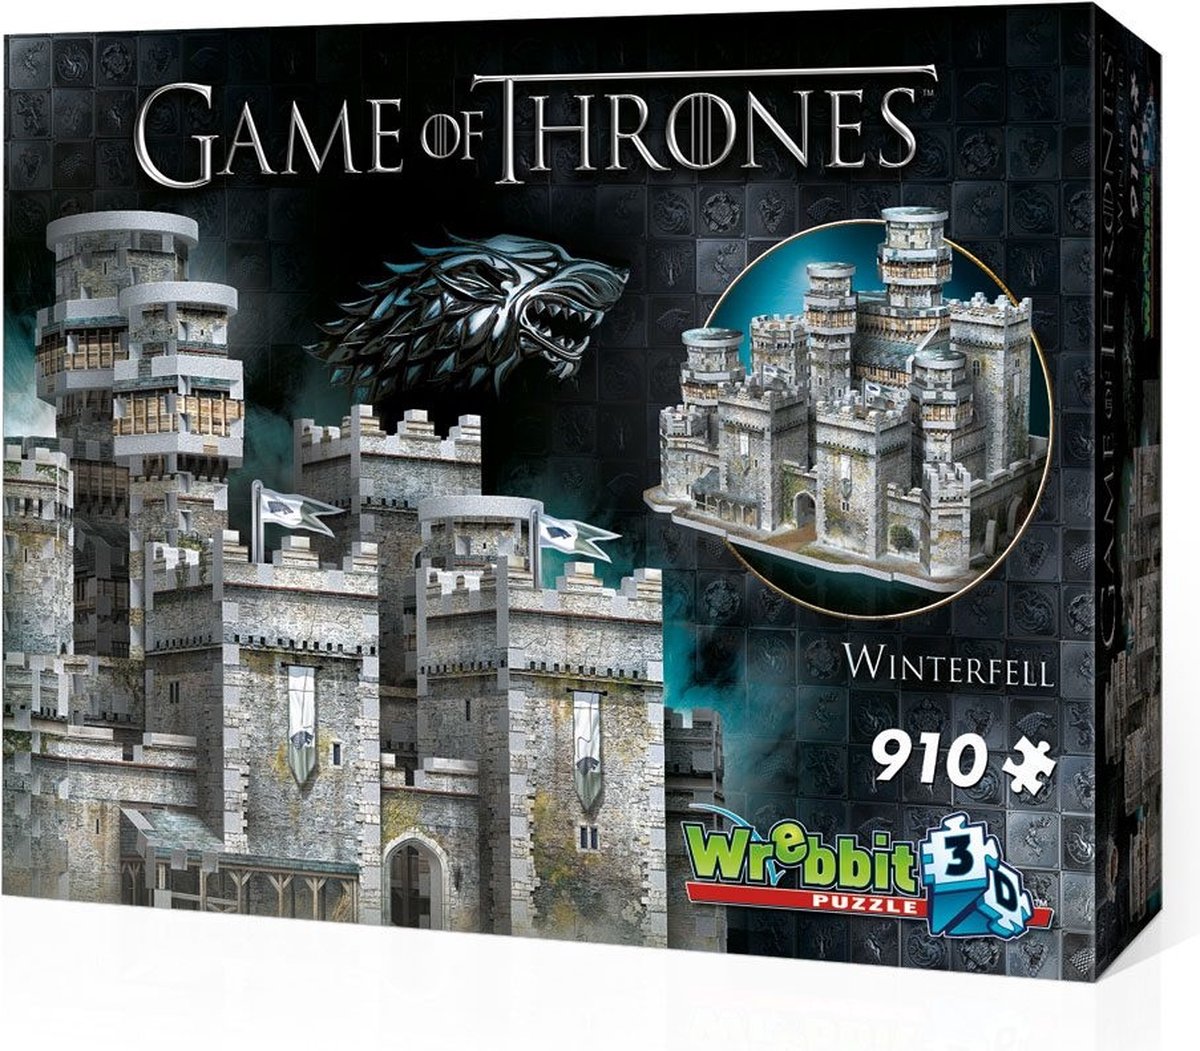 Puzzle 3D Wrebbit - Game of Thrones Winterfell (910) | bol.com